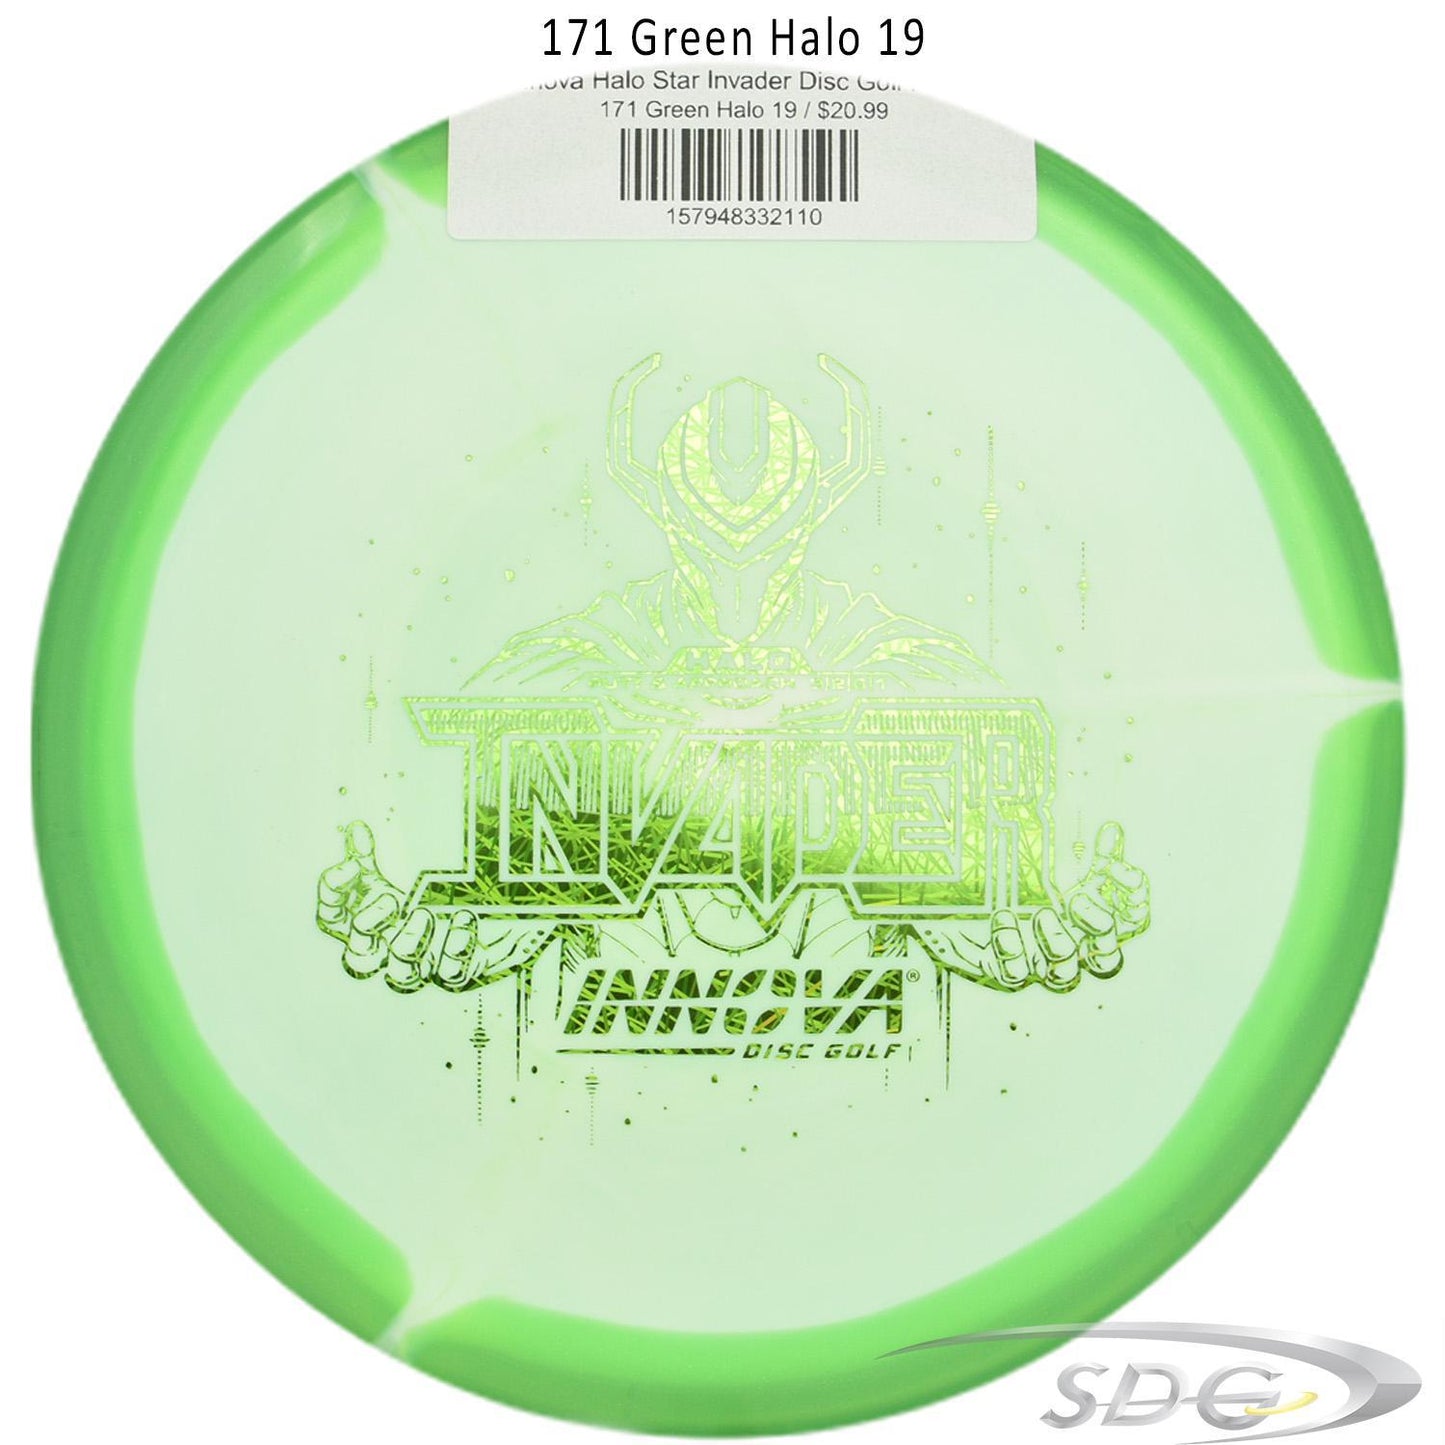 innova-halo-star-invader-disc-golf-putter 171 Green Halo 19 